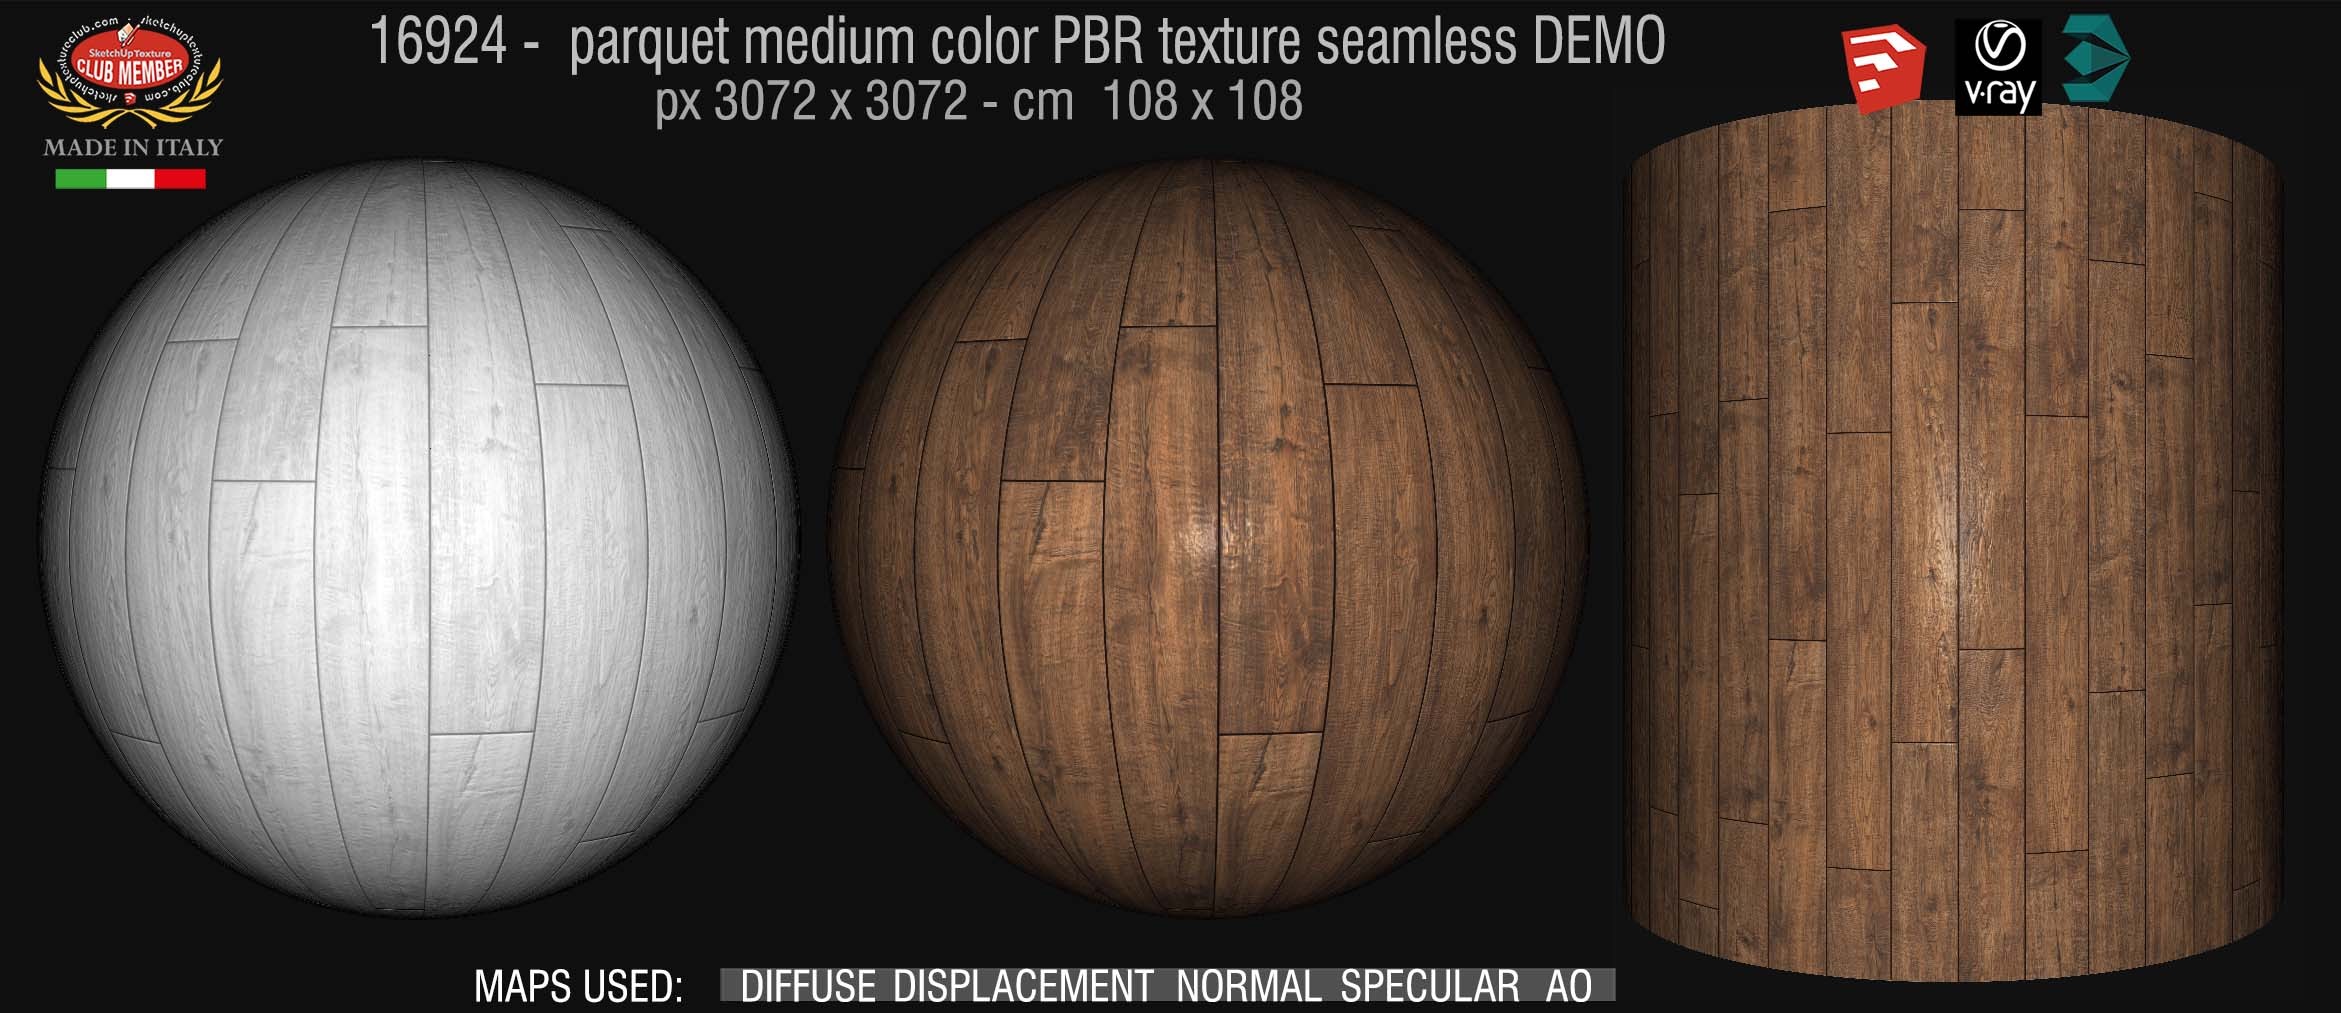 16924 parquet medium color PBR texture seamless DEMO